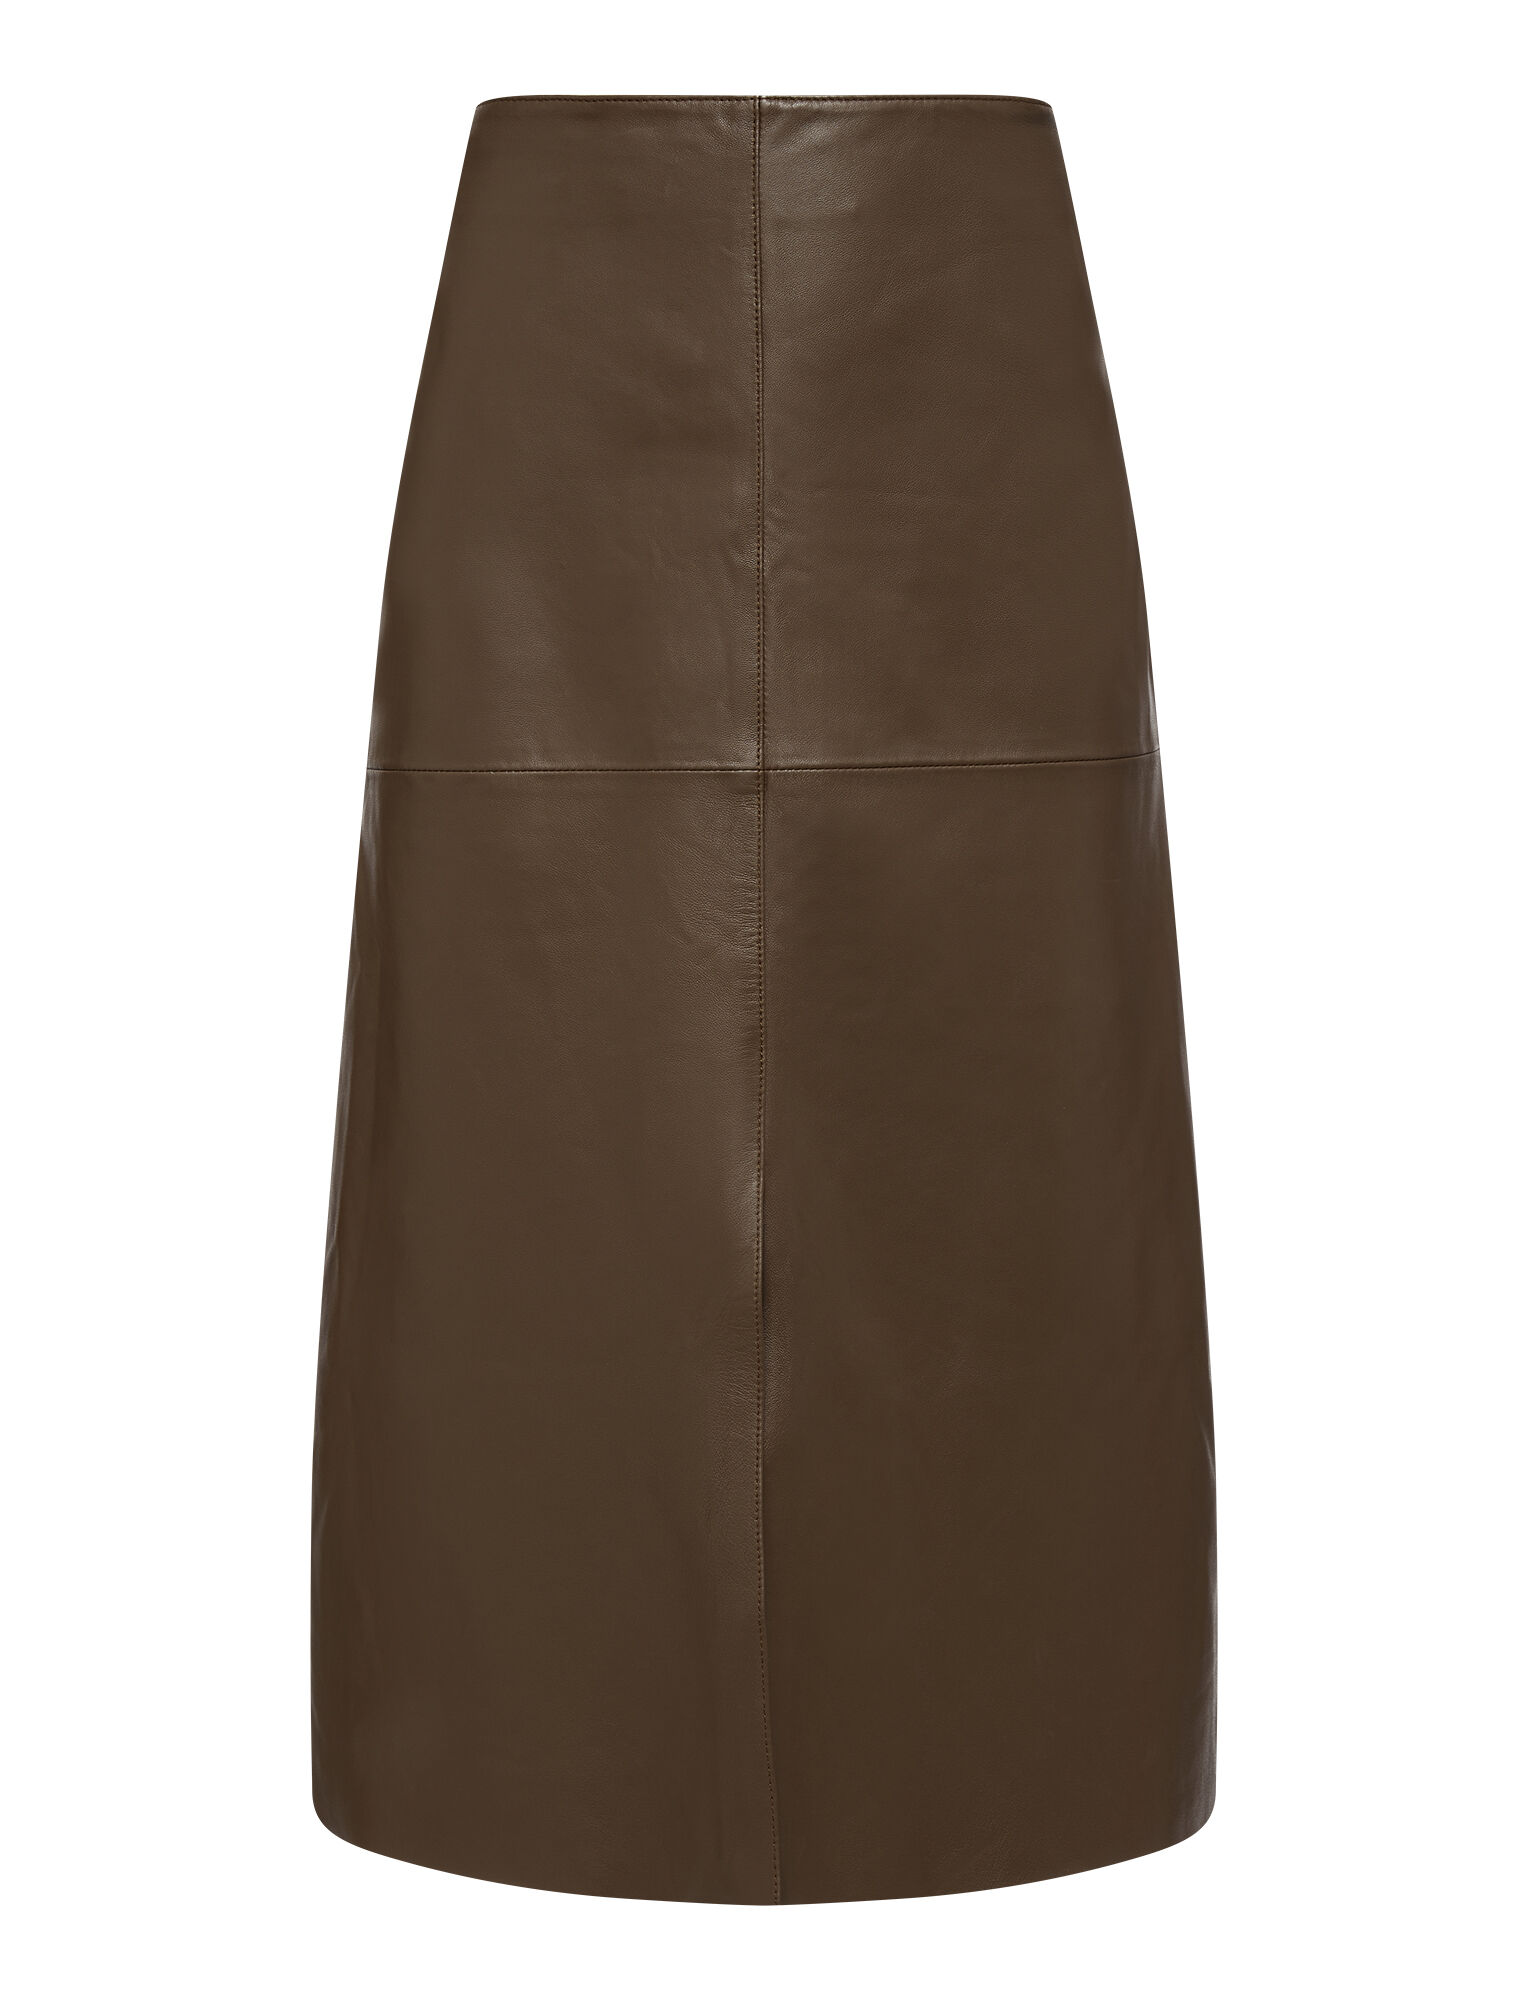 Joseph, Nappa Leather Sidena Skirt, in PINECONE